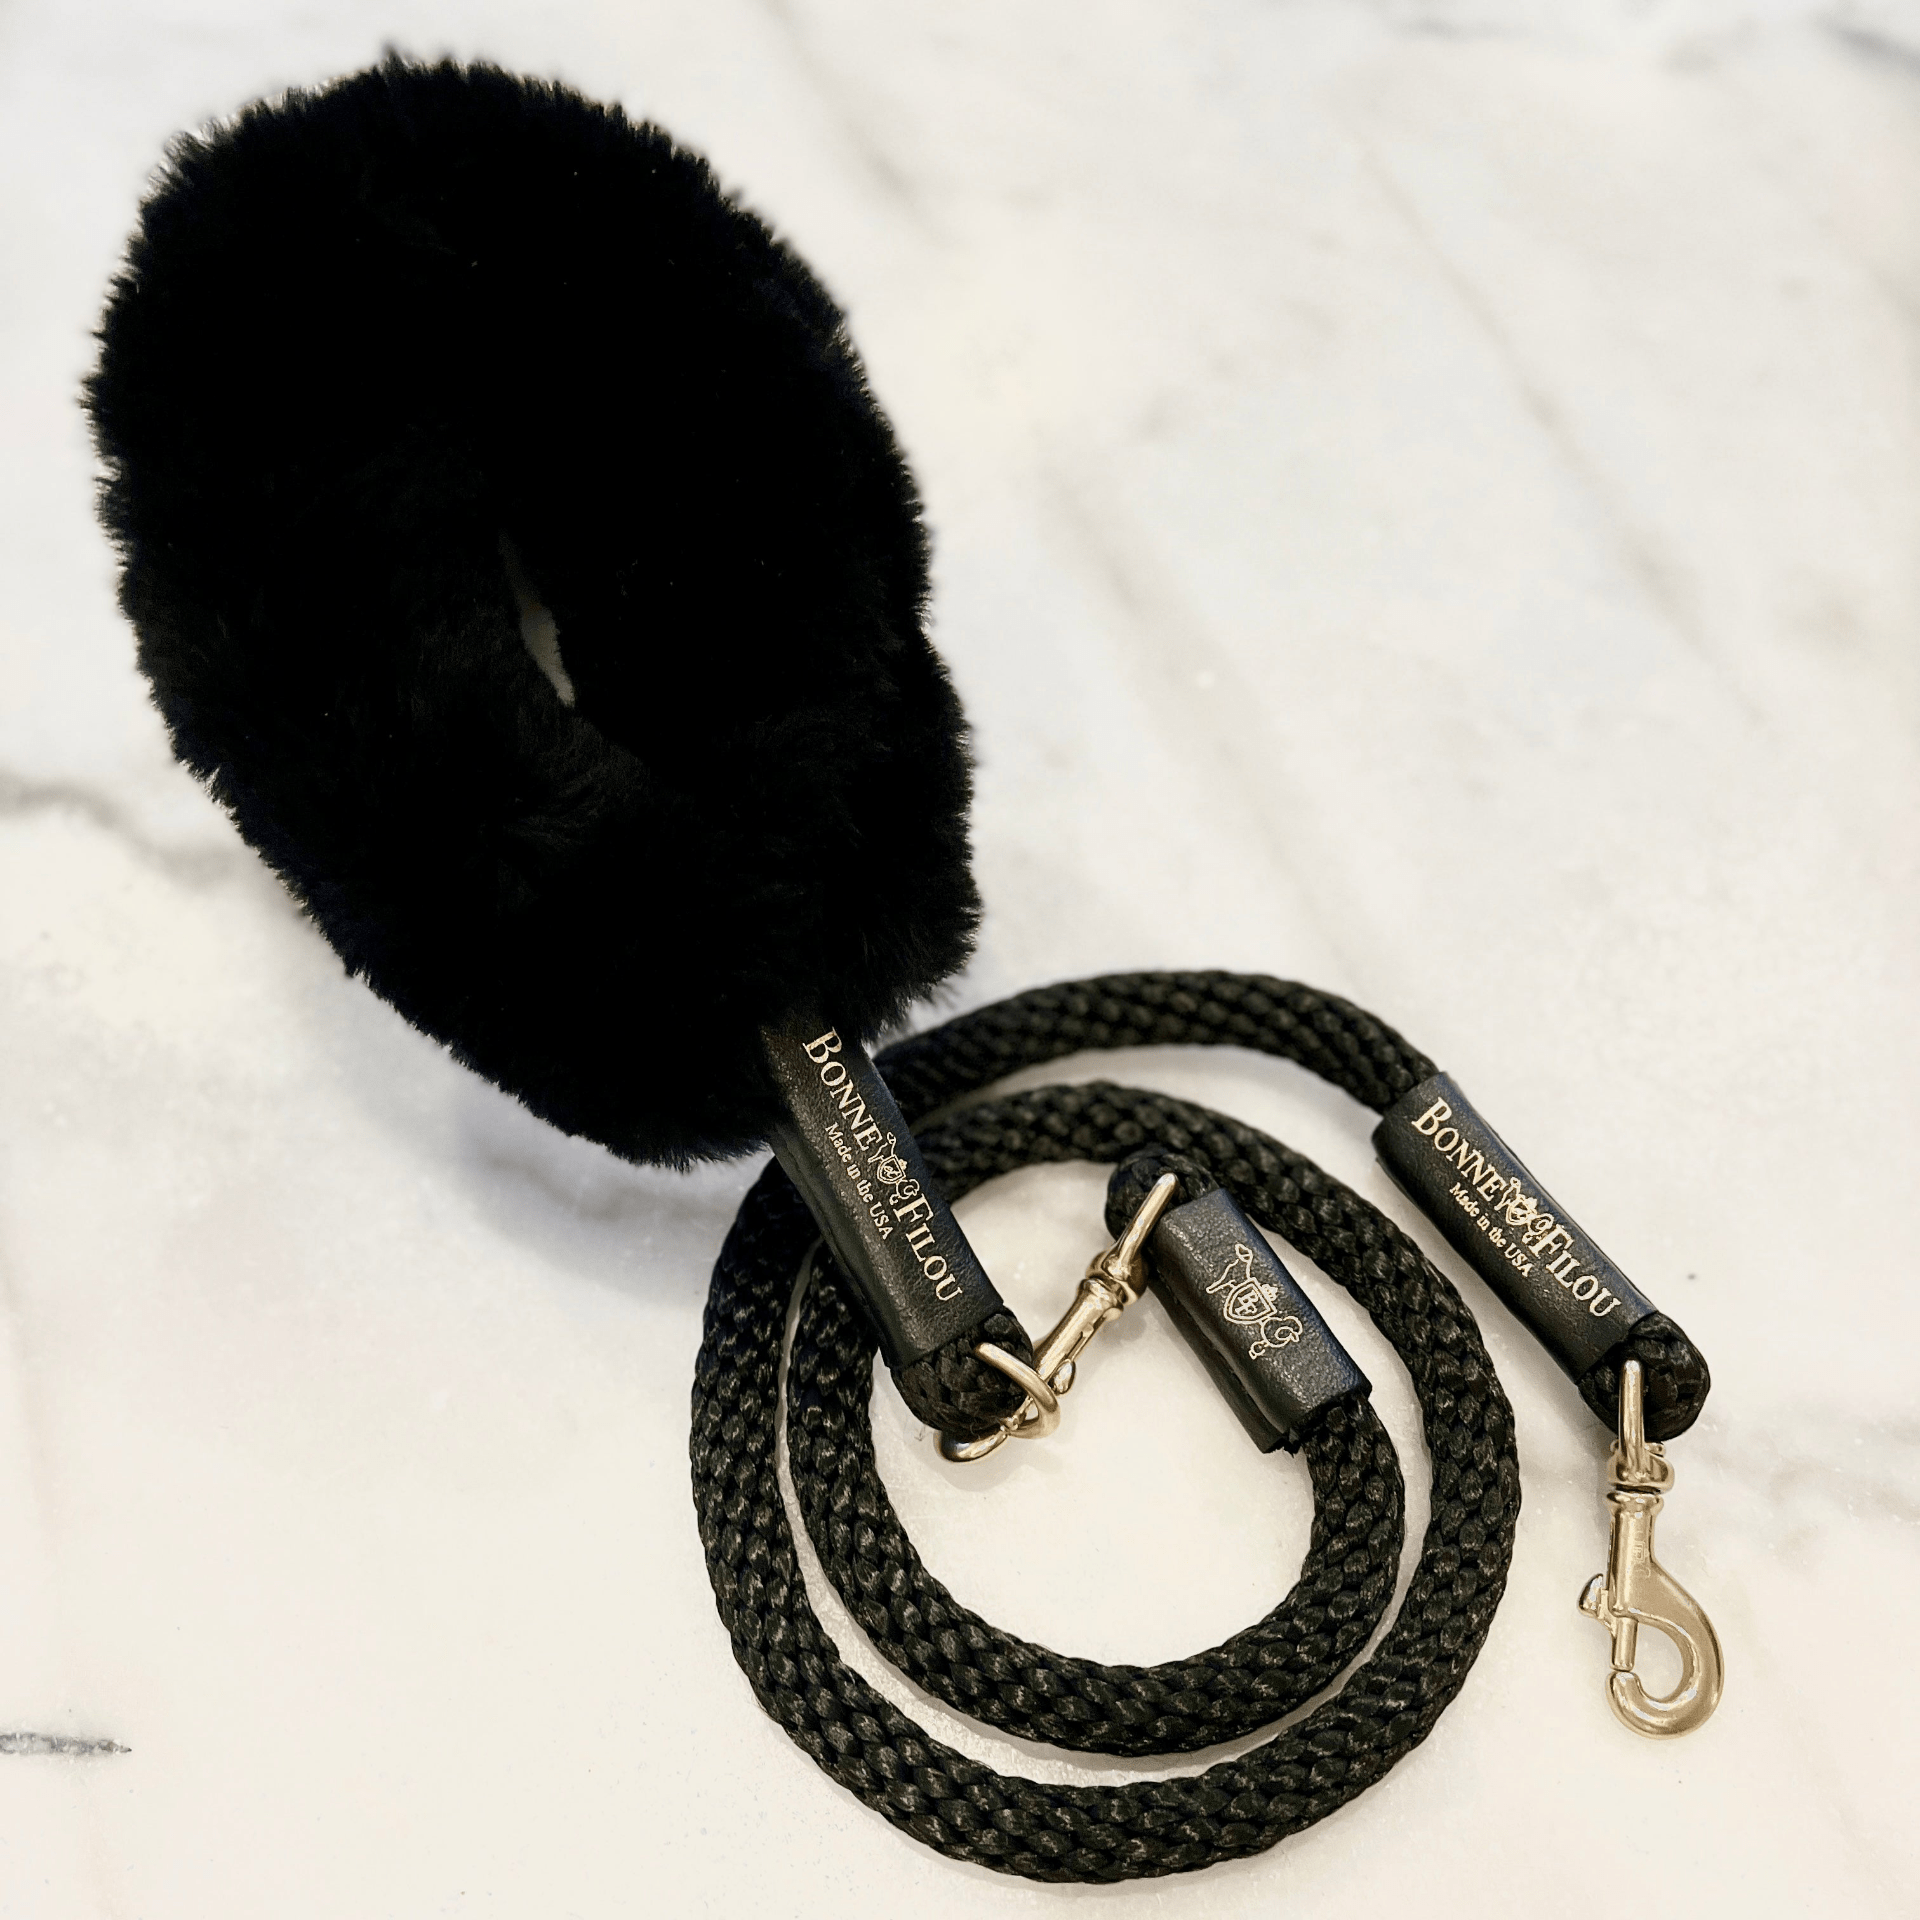 Dog and Pet Stuff Black Grip + Black Leash Bundle Shearling Fur Grip + Rope Leash for Dogs